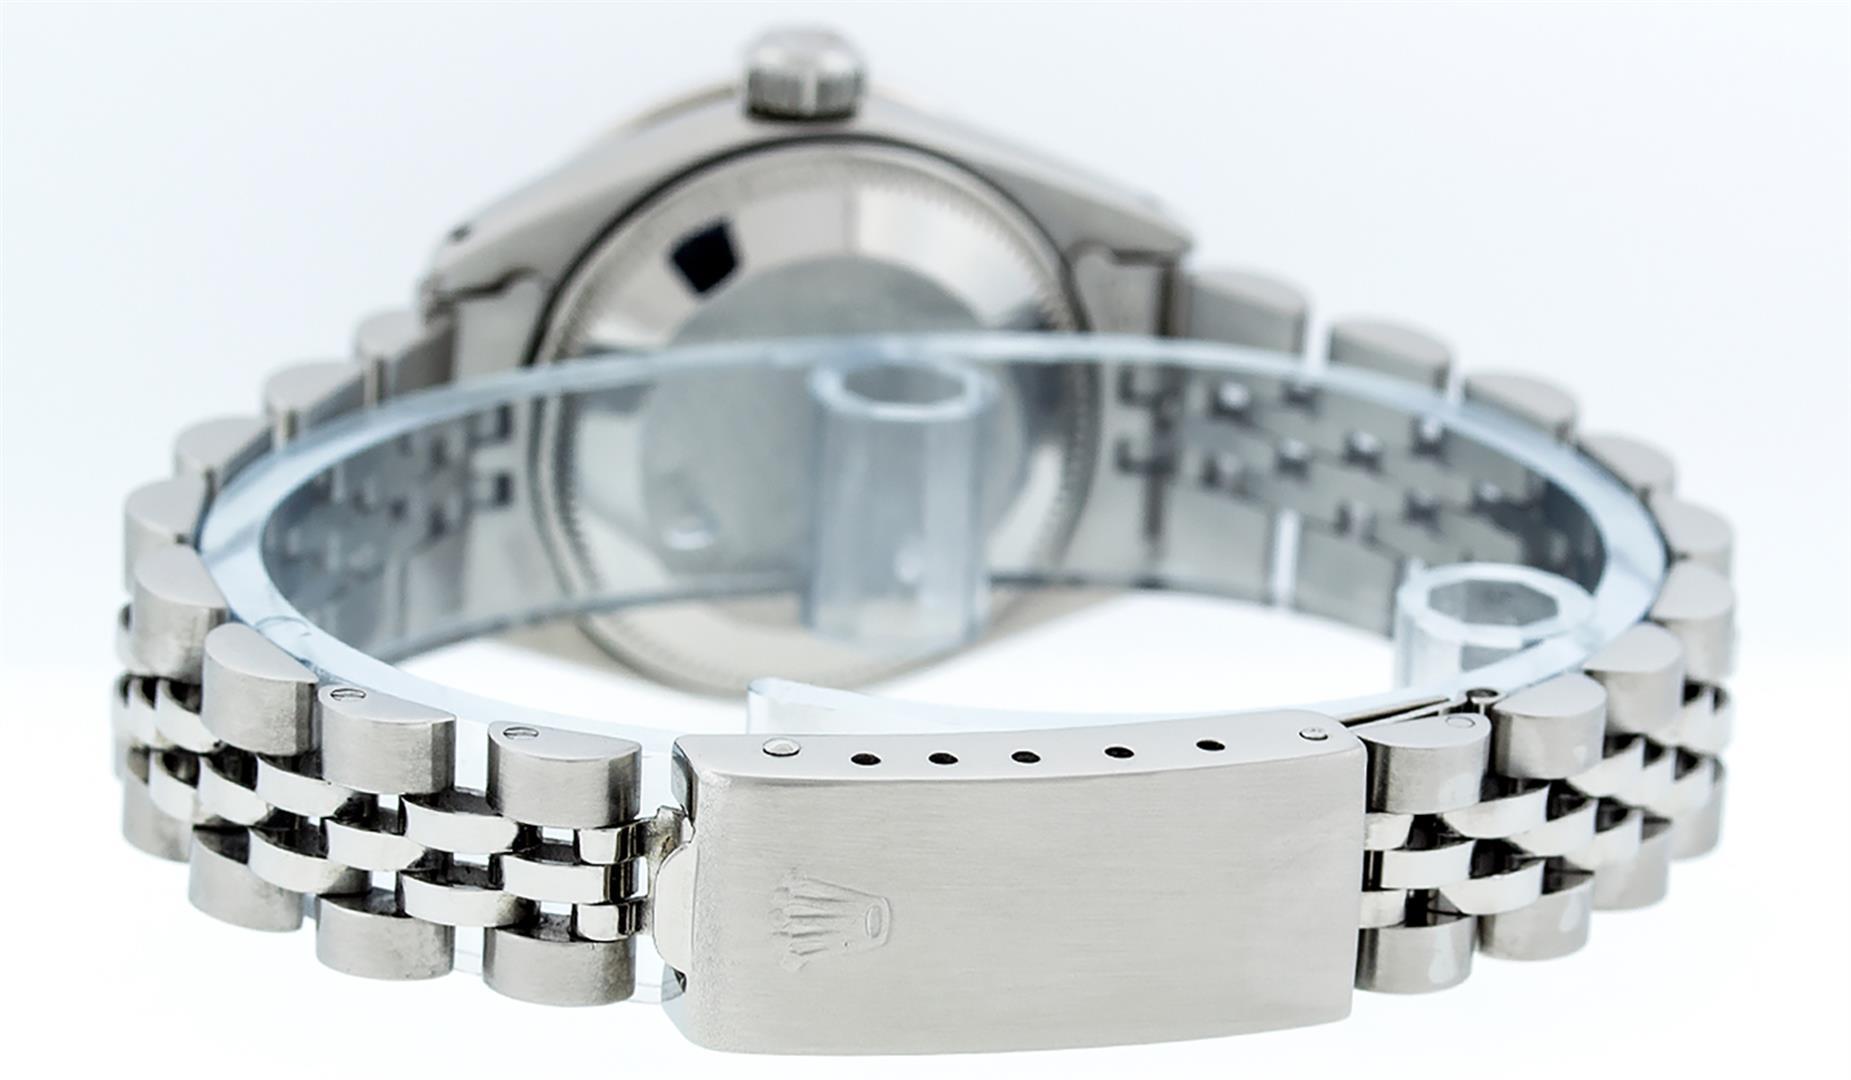 Rolex Ladies Stainless Steel Ice Blue Diamond & Sapphire Datejust Wristwatch